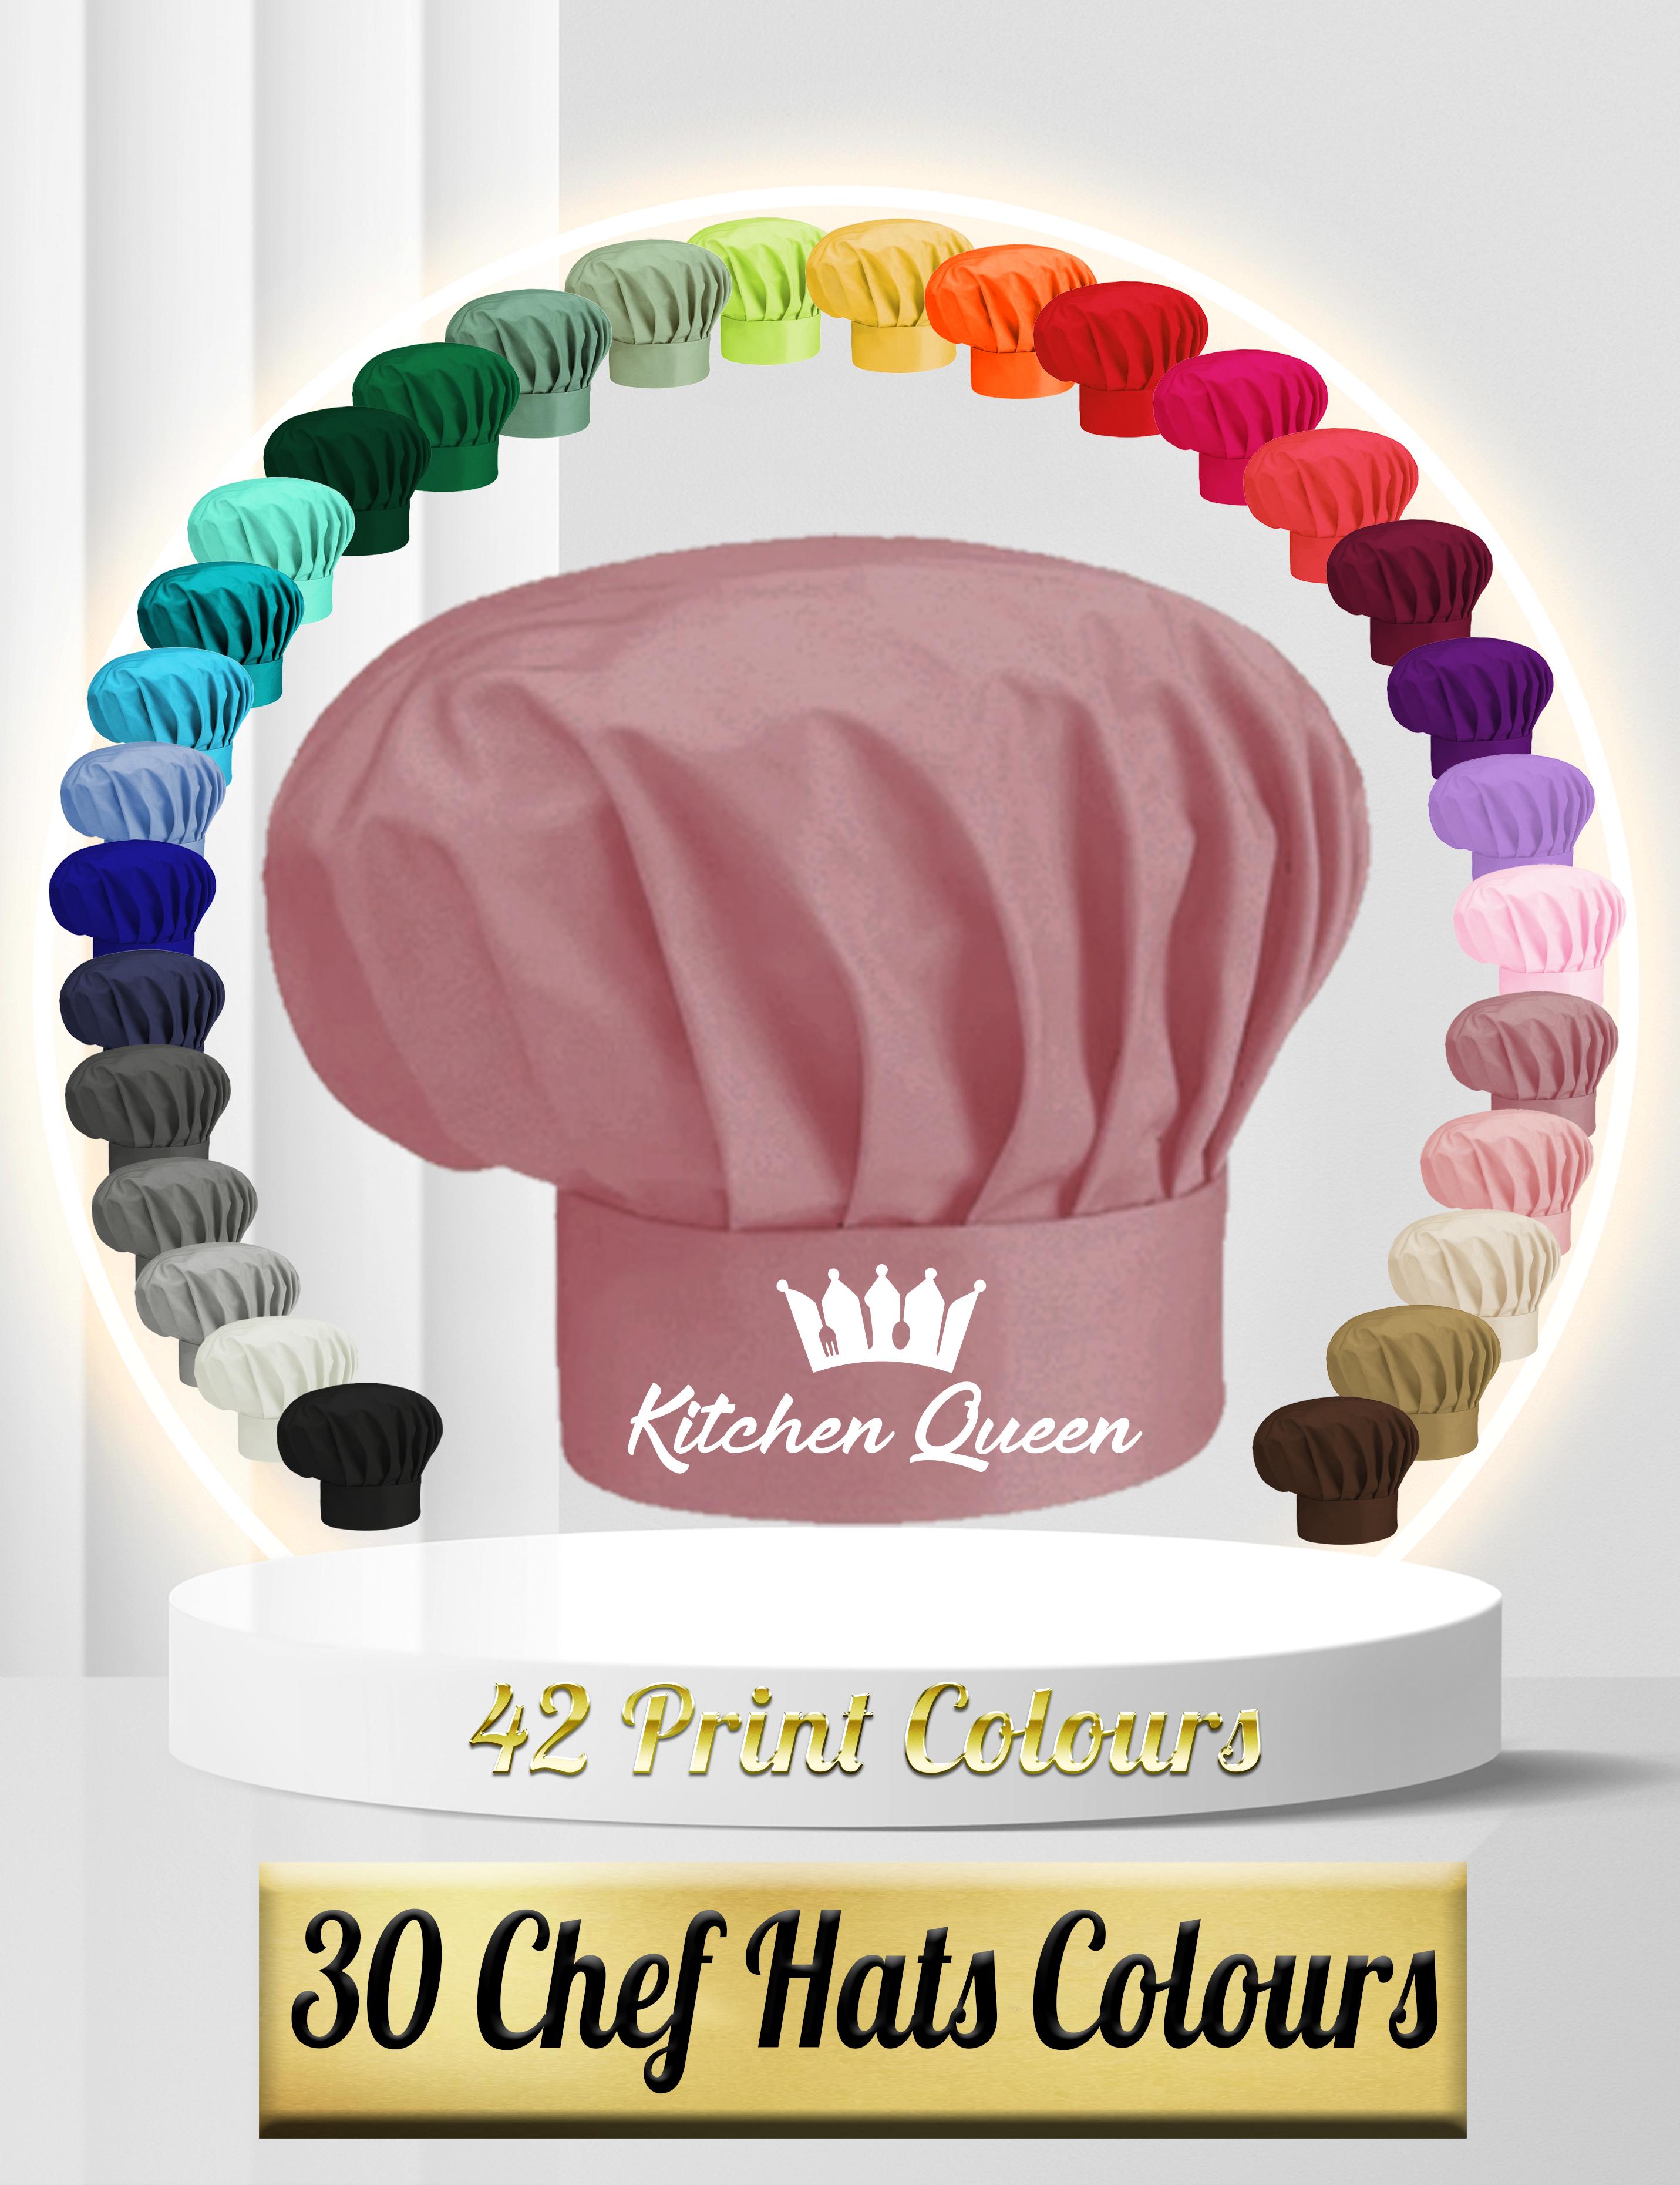 Kitchen queen chef's hat printed